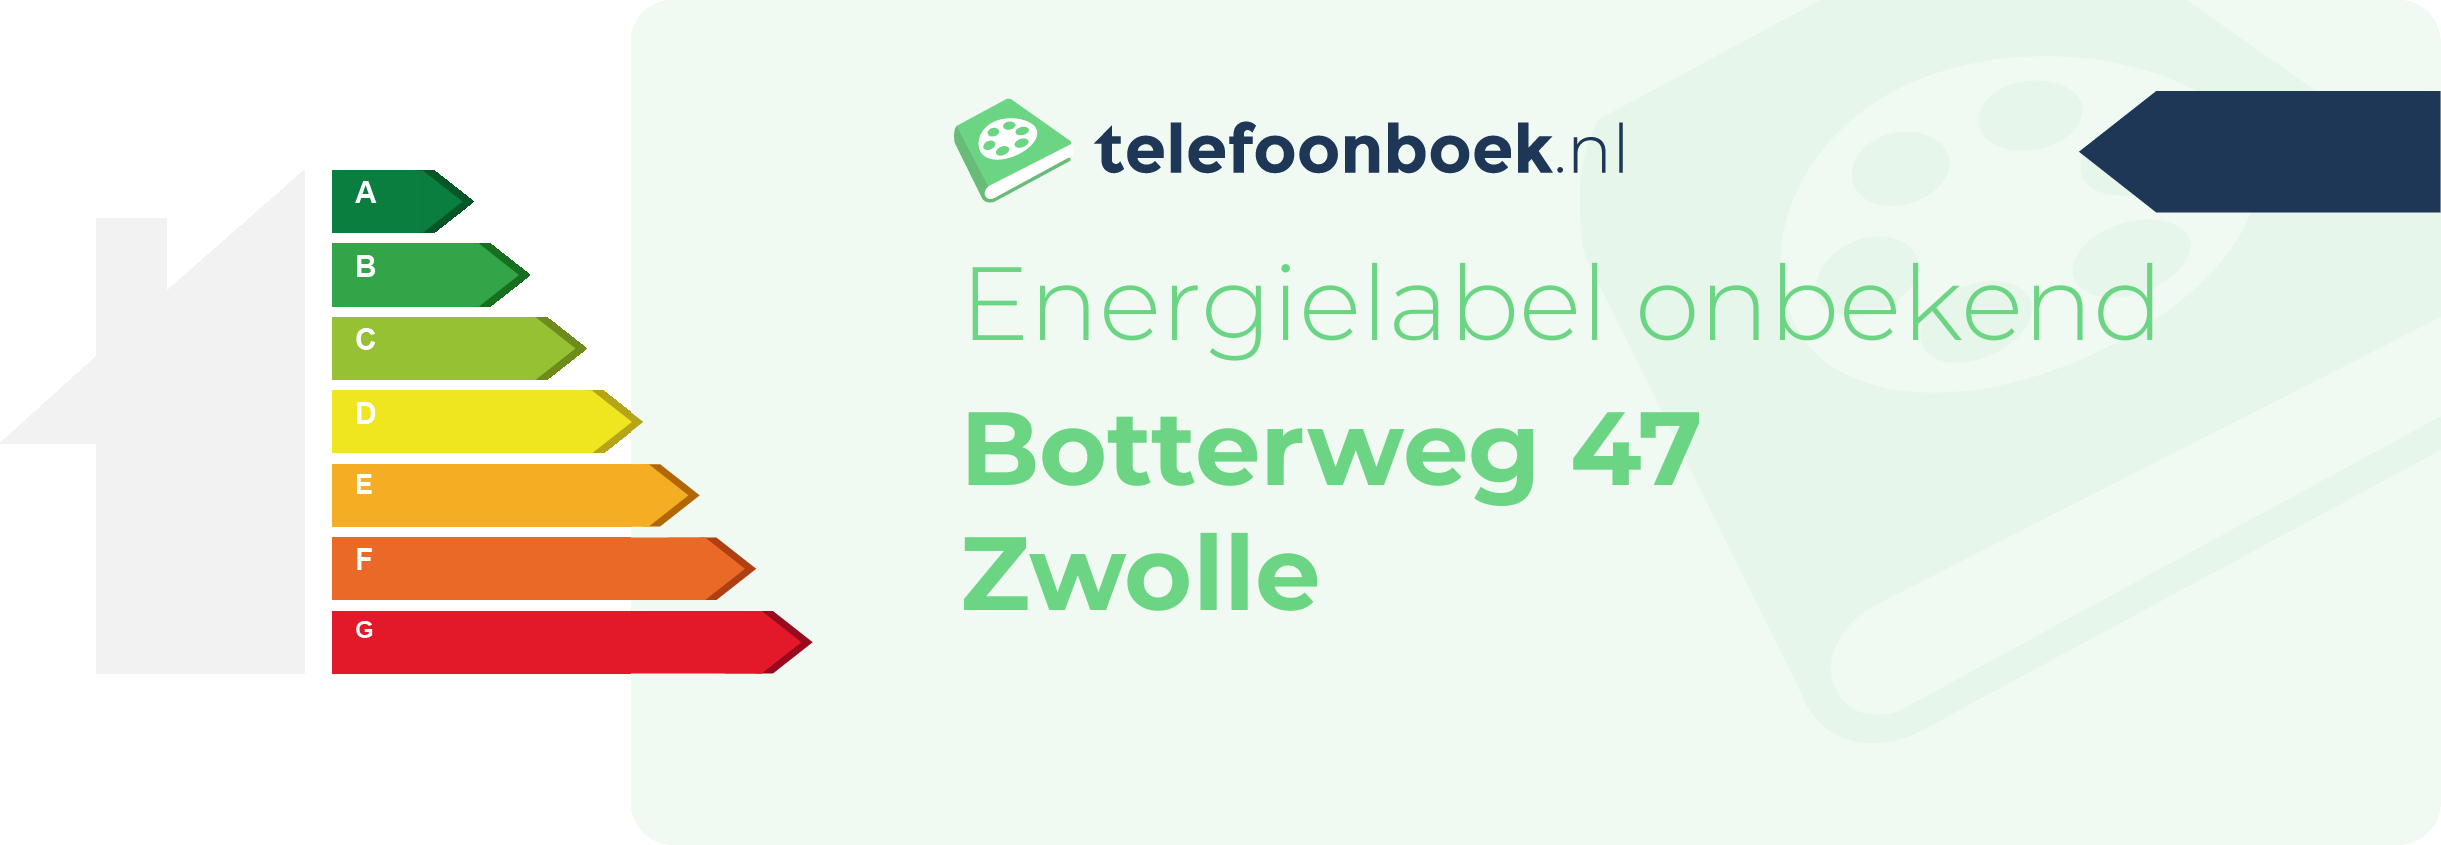 Energielabel Botterweg 47 Zwolle